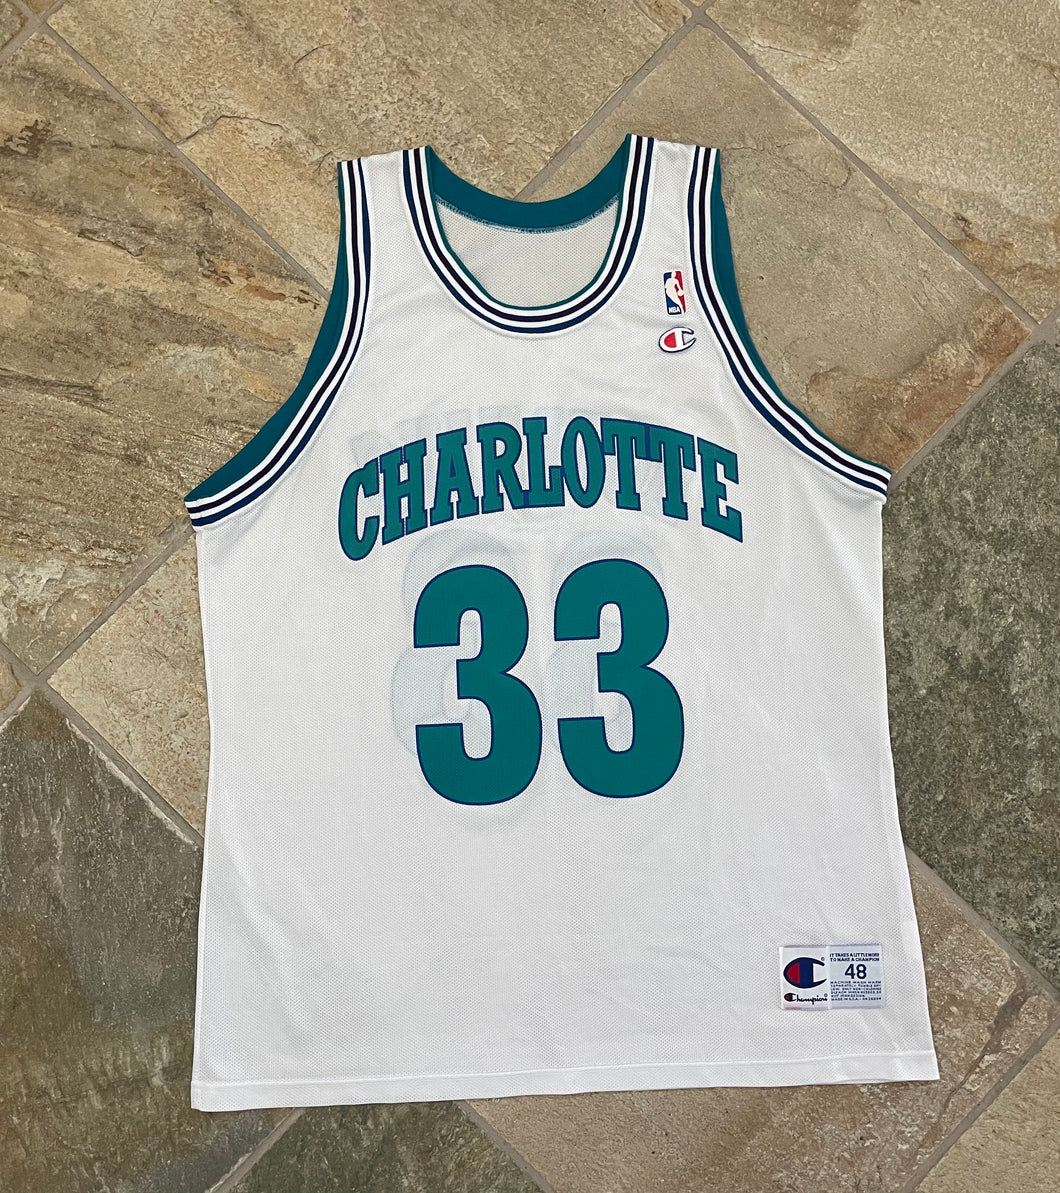 Vintage Charlotte Hornets Alonzo Mourning Champion Basketball Jersey, Size 48, XL